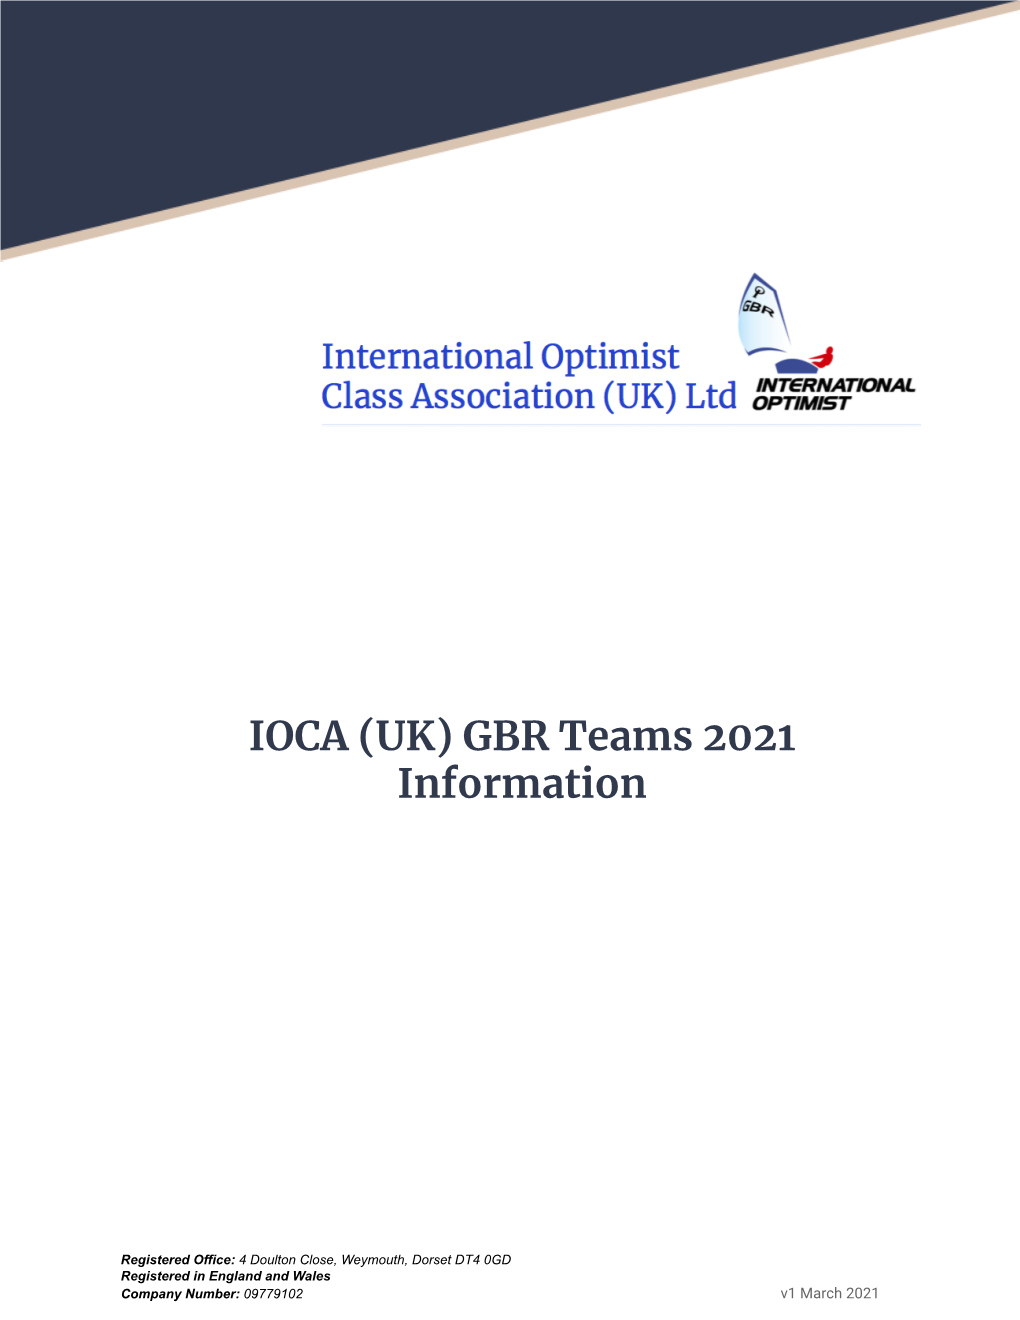 IOCA (UK) GBR Teams 2021 Information